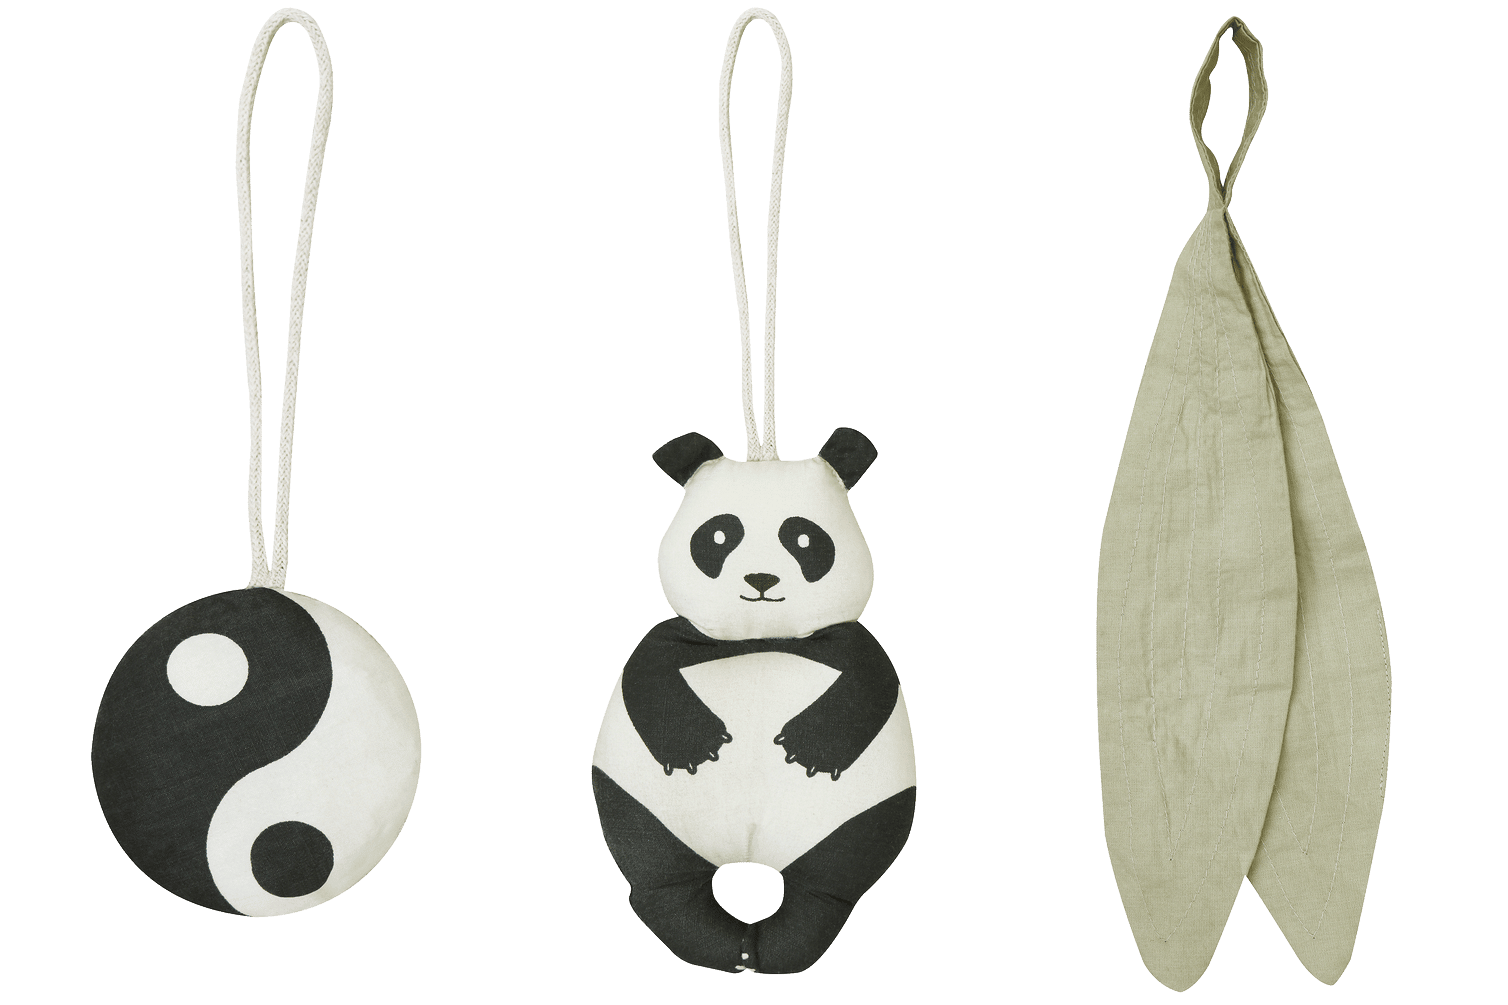 Set of 3 rattle toy hangers - Panda